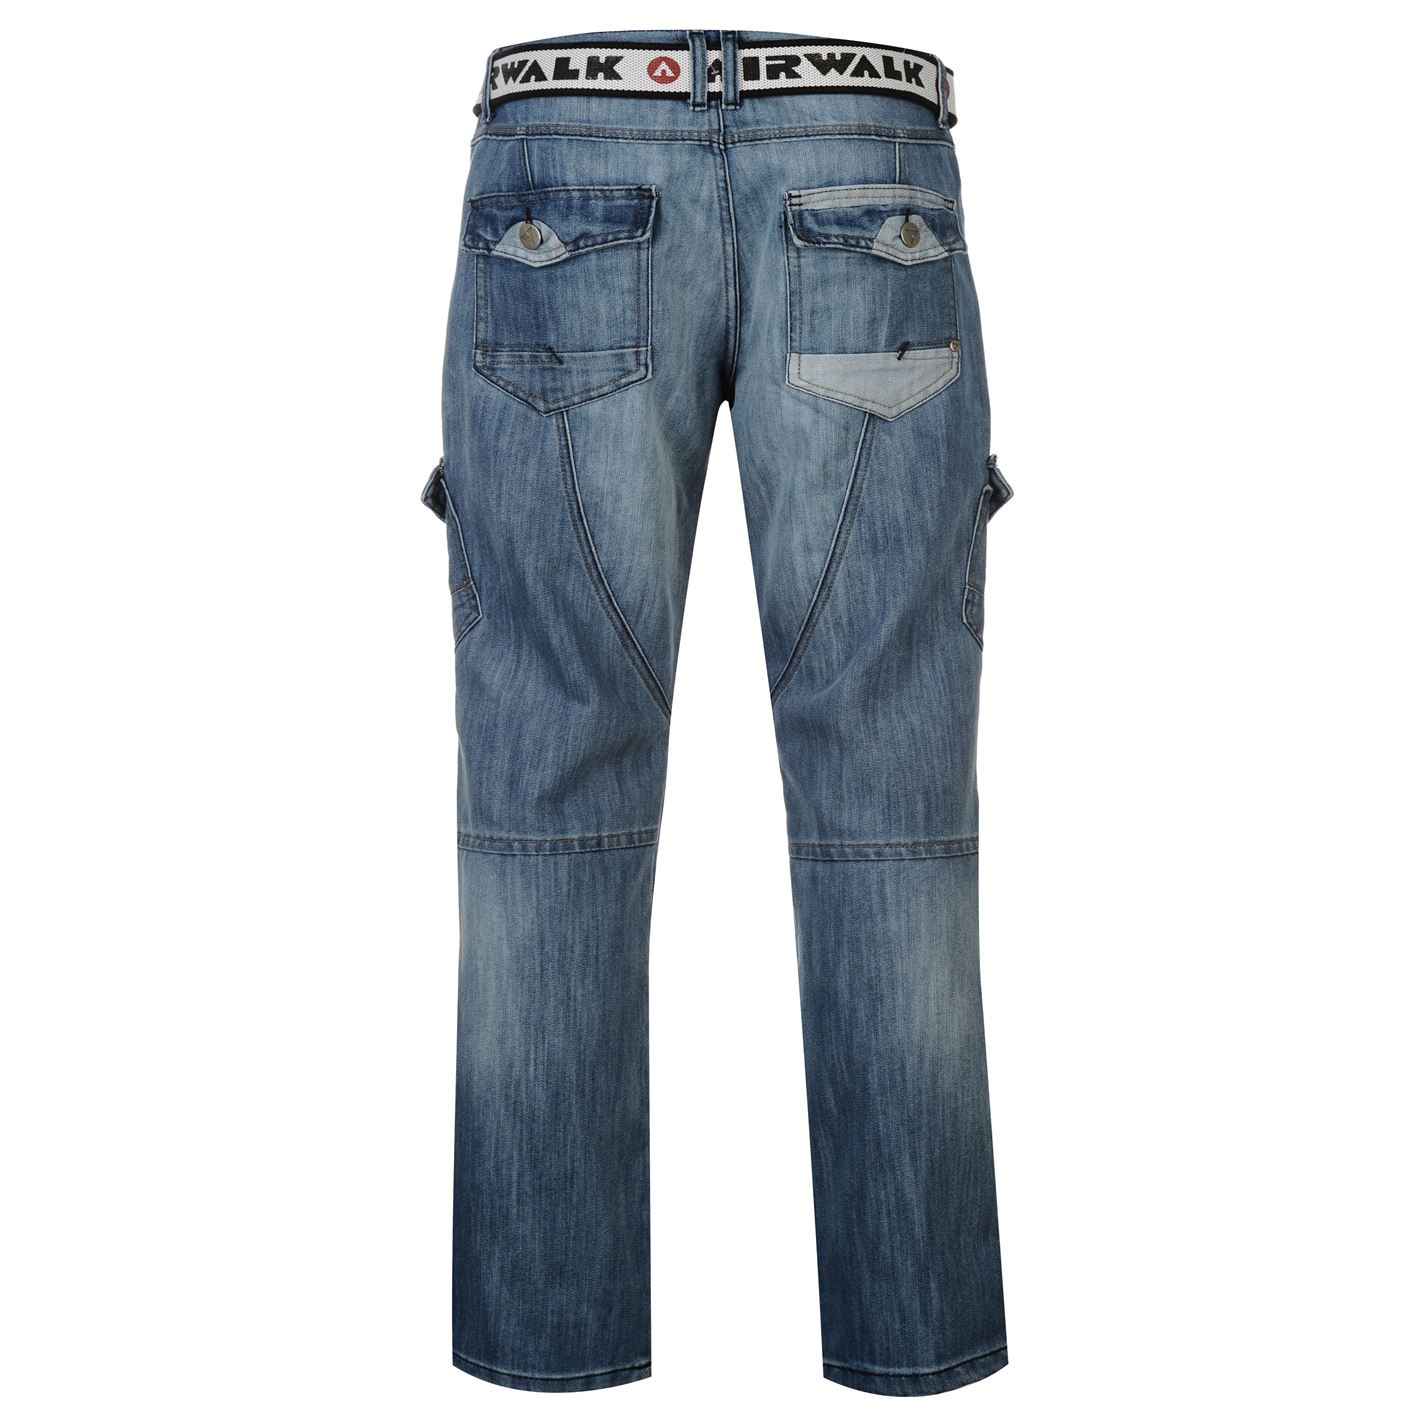 Airwalk Belted Cargo Jeans Straight Fit Belt 6 Pockets Denim Mens Gents ...